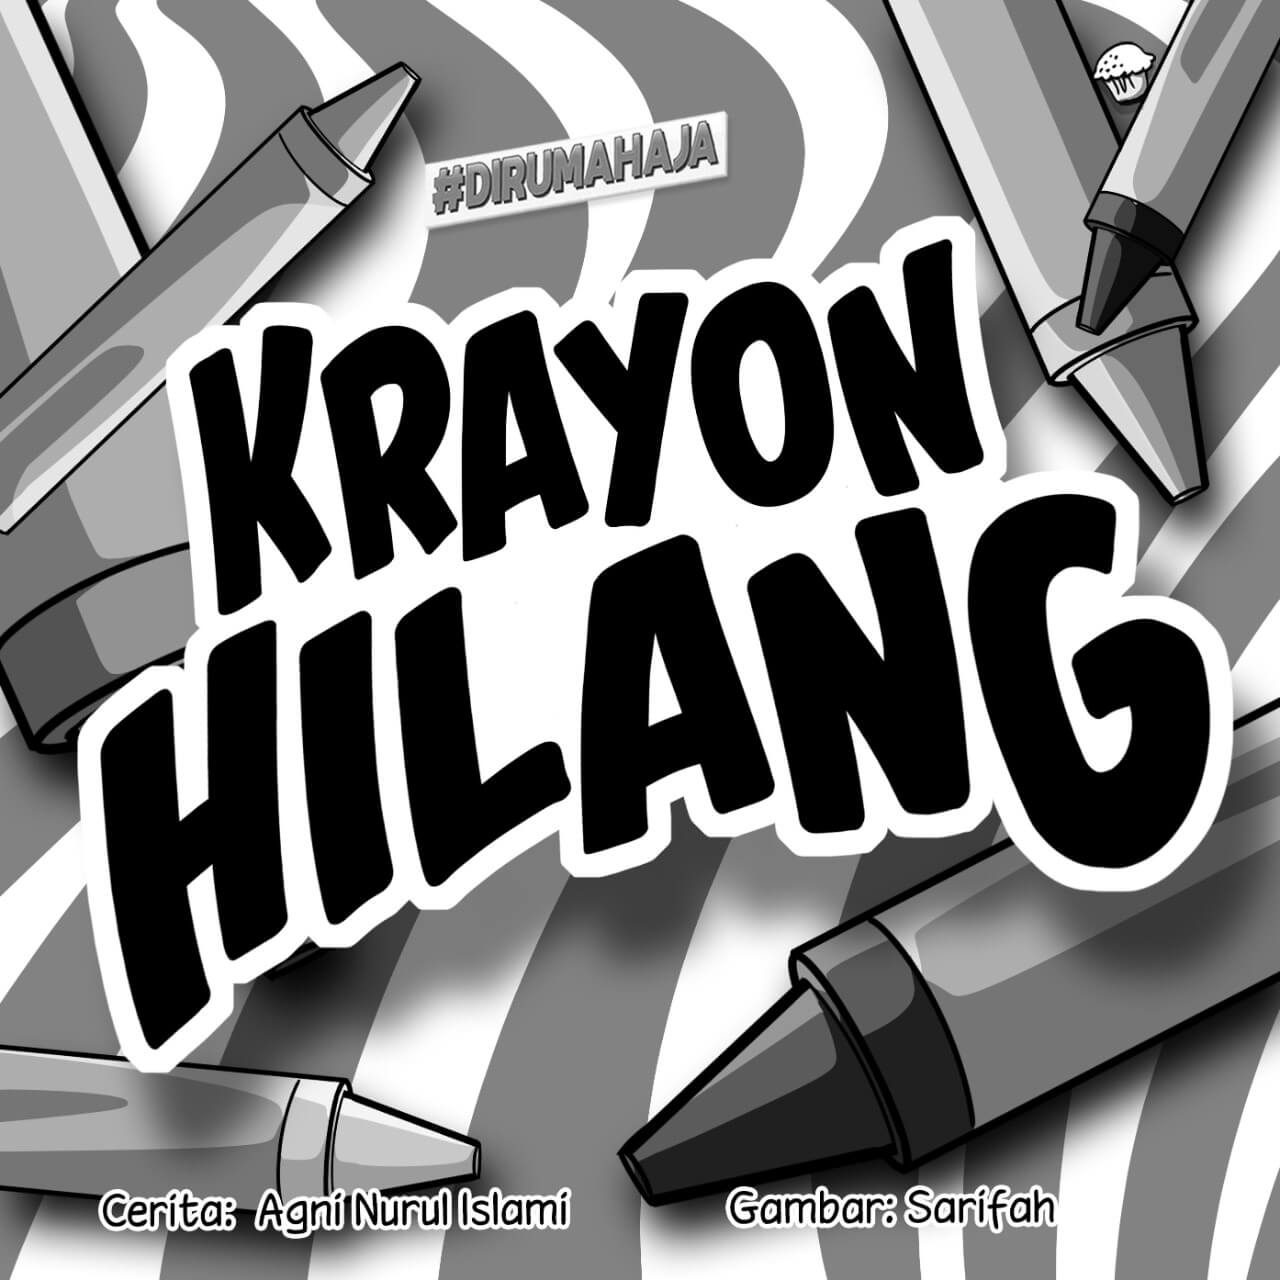 krayon hilang cover bw